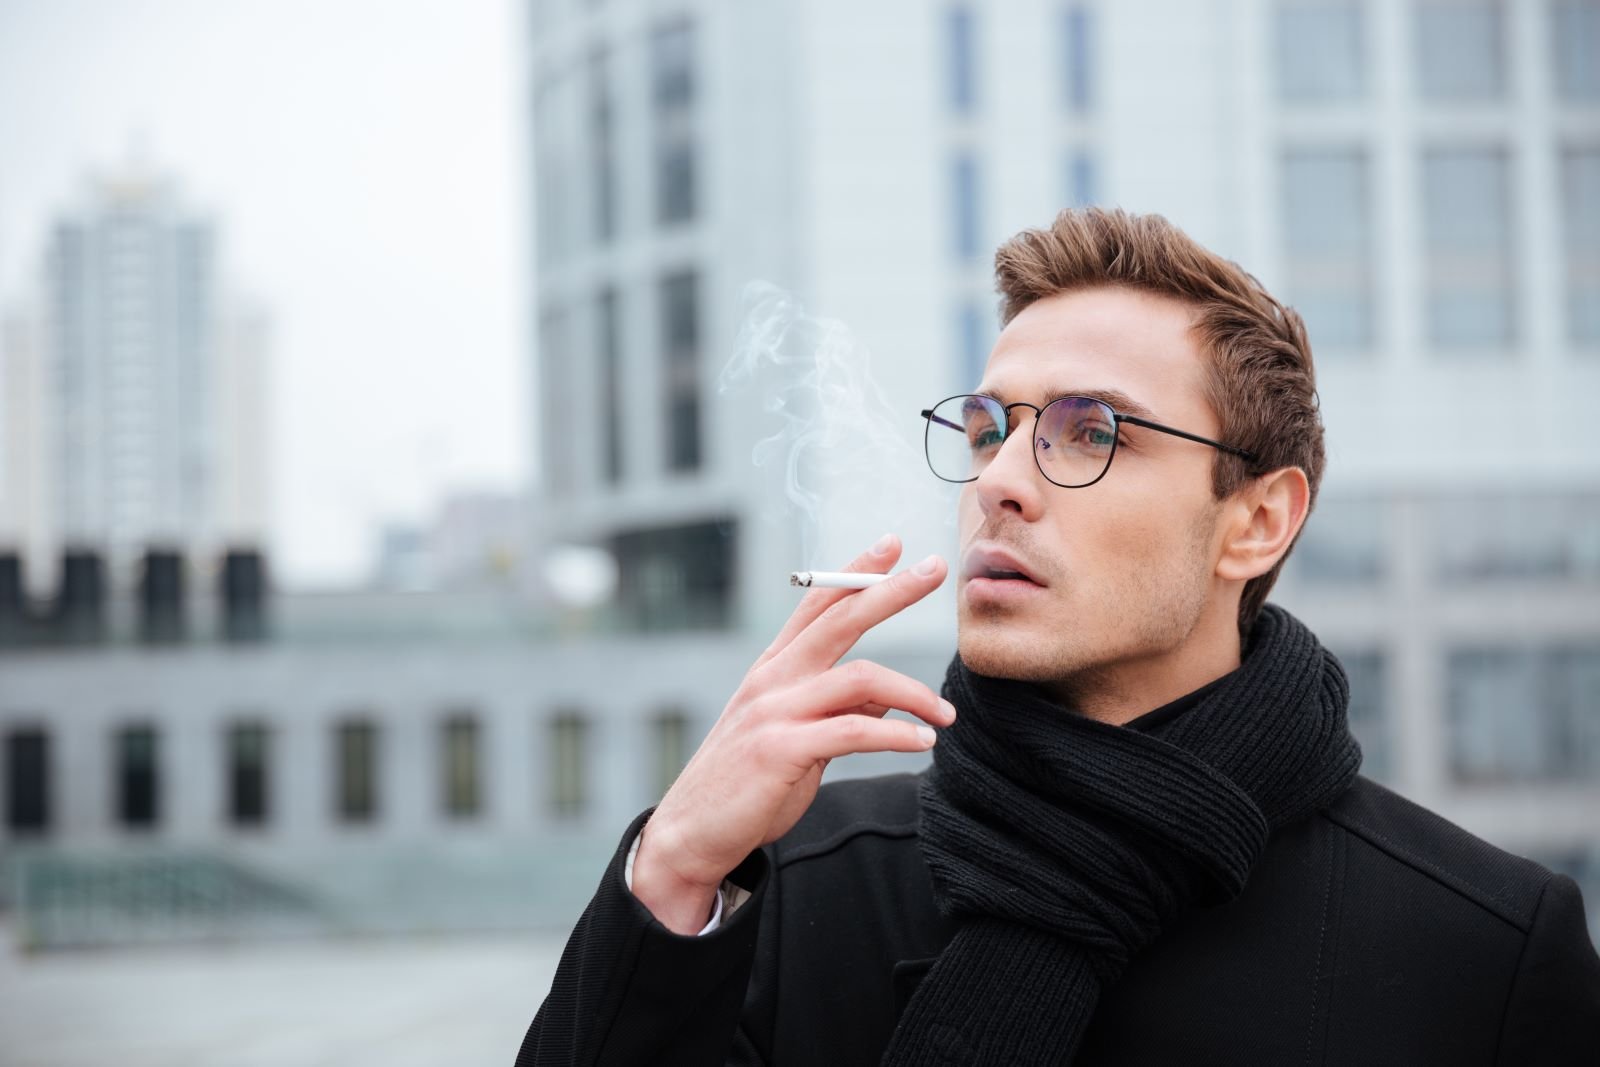 Man-Smoking-bad-habits-addiction